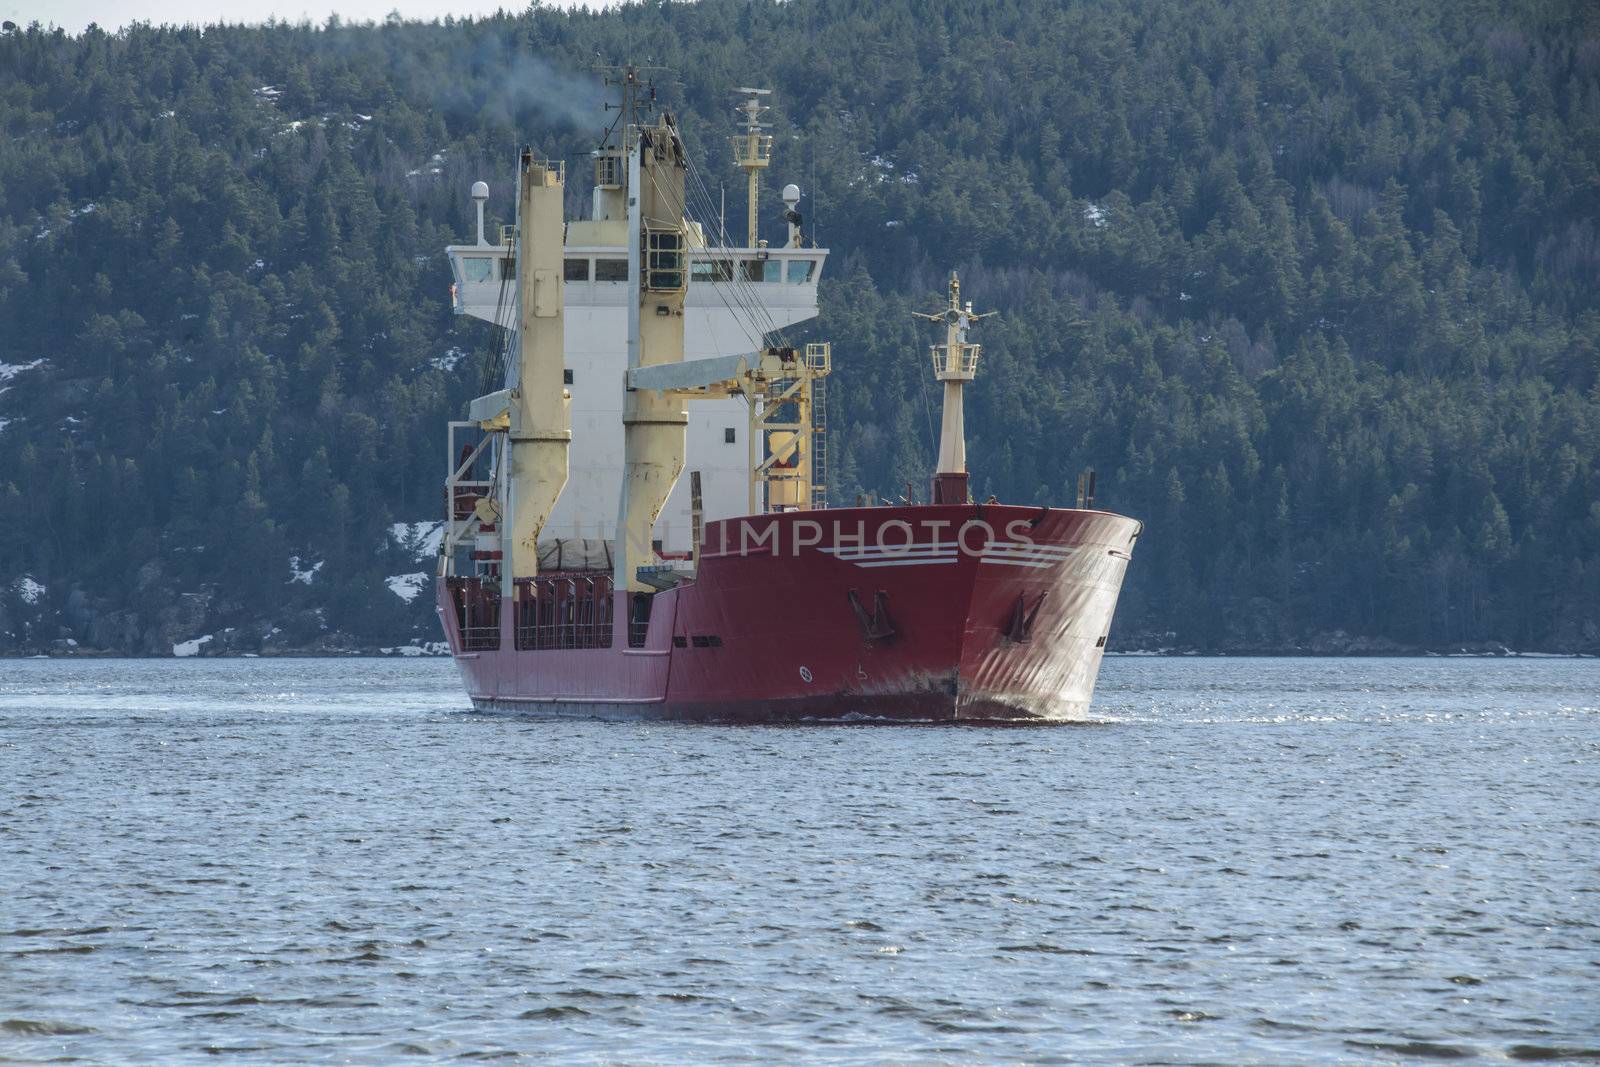 Mv Landy arrives Halden harbor, Norway.The photo was shot one day in April 2013.